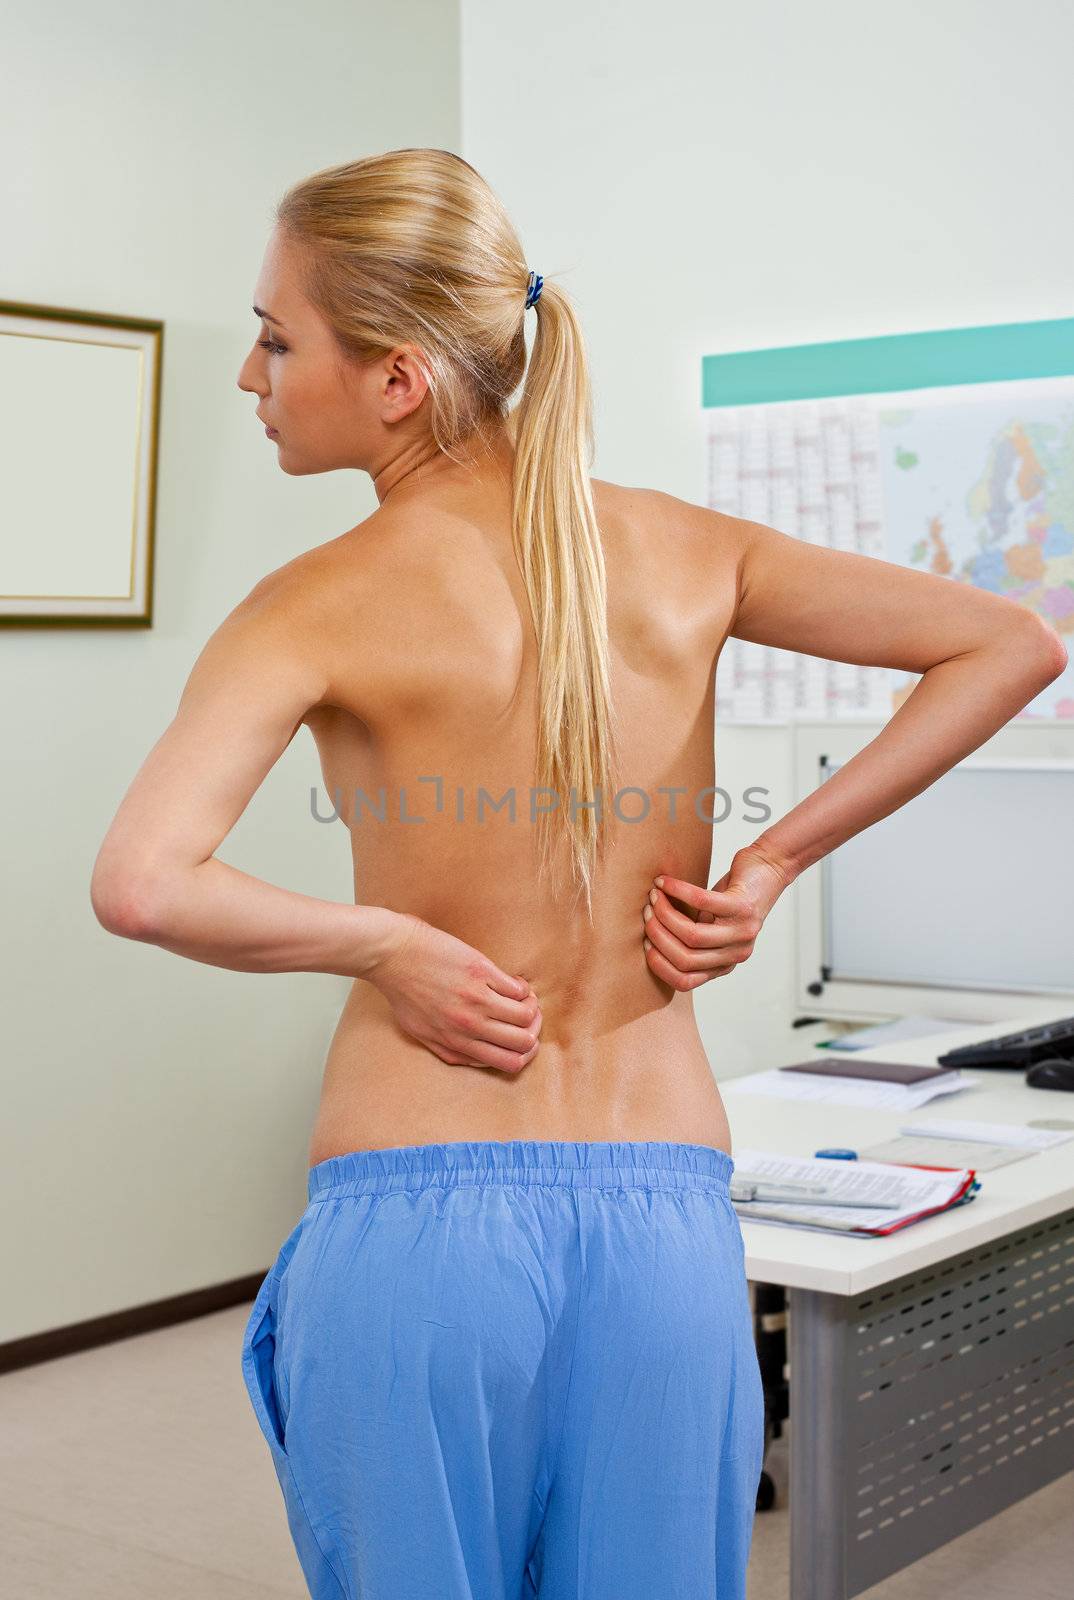 Topless female patient back pain by vilevi